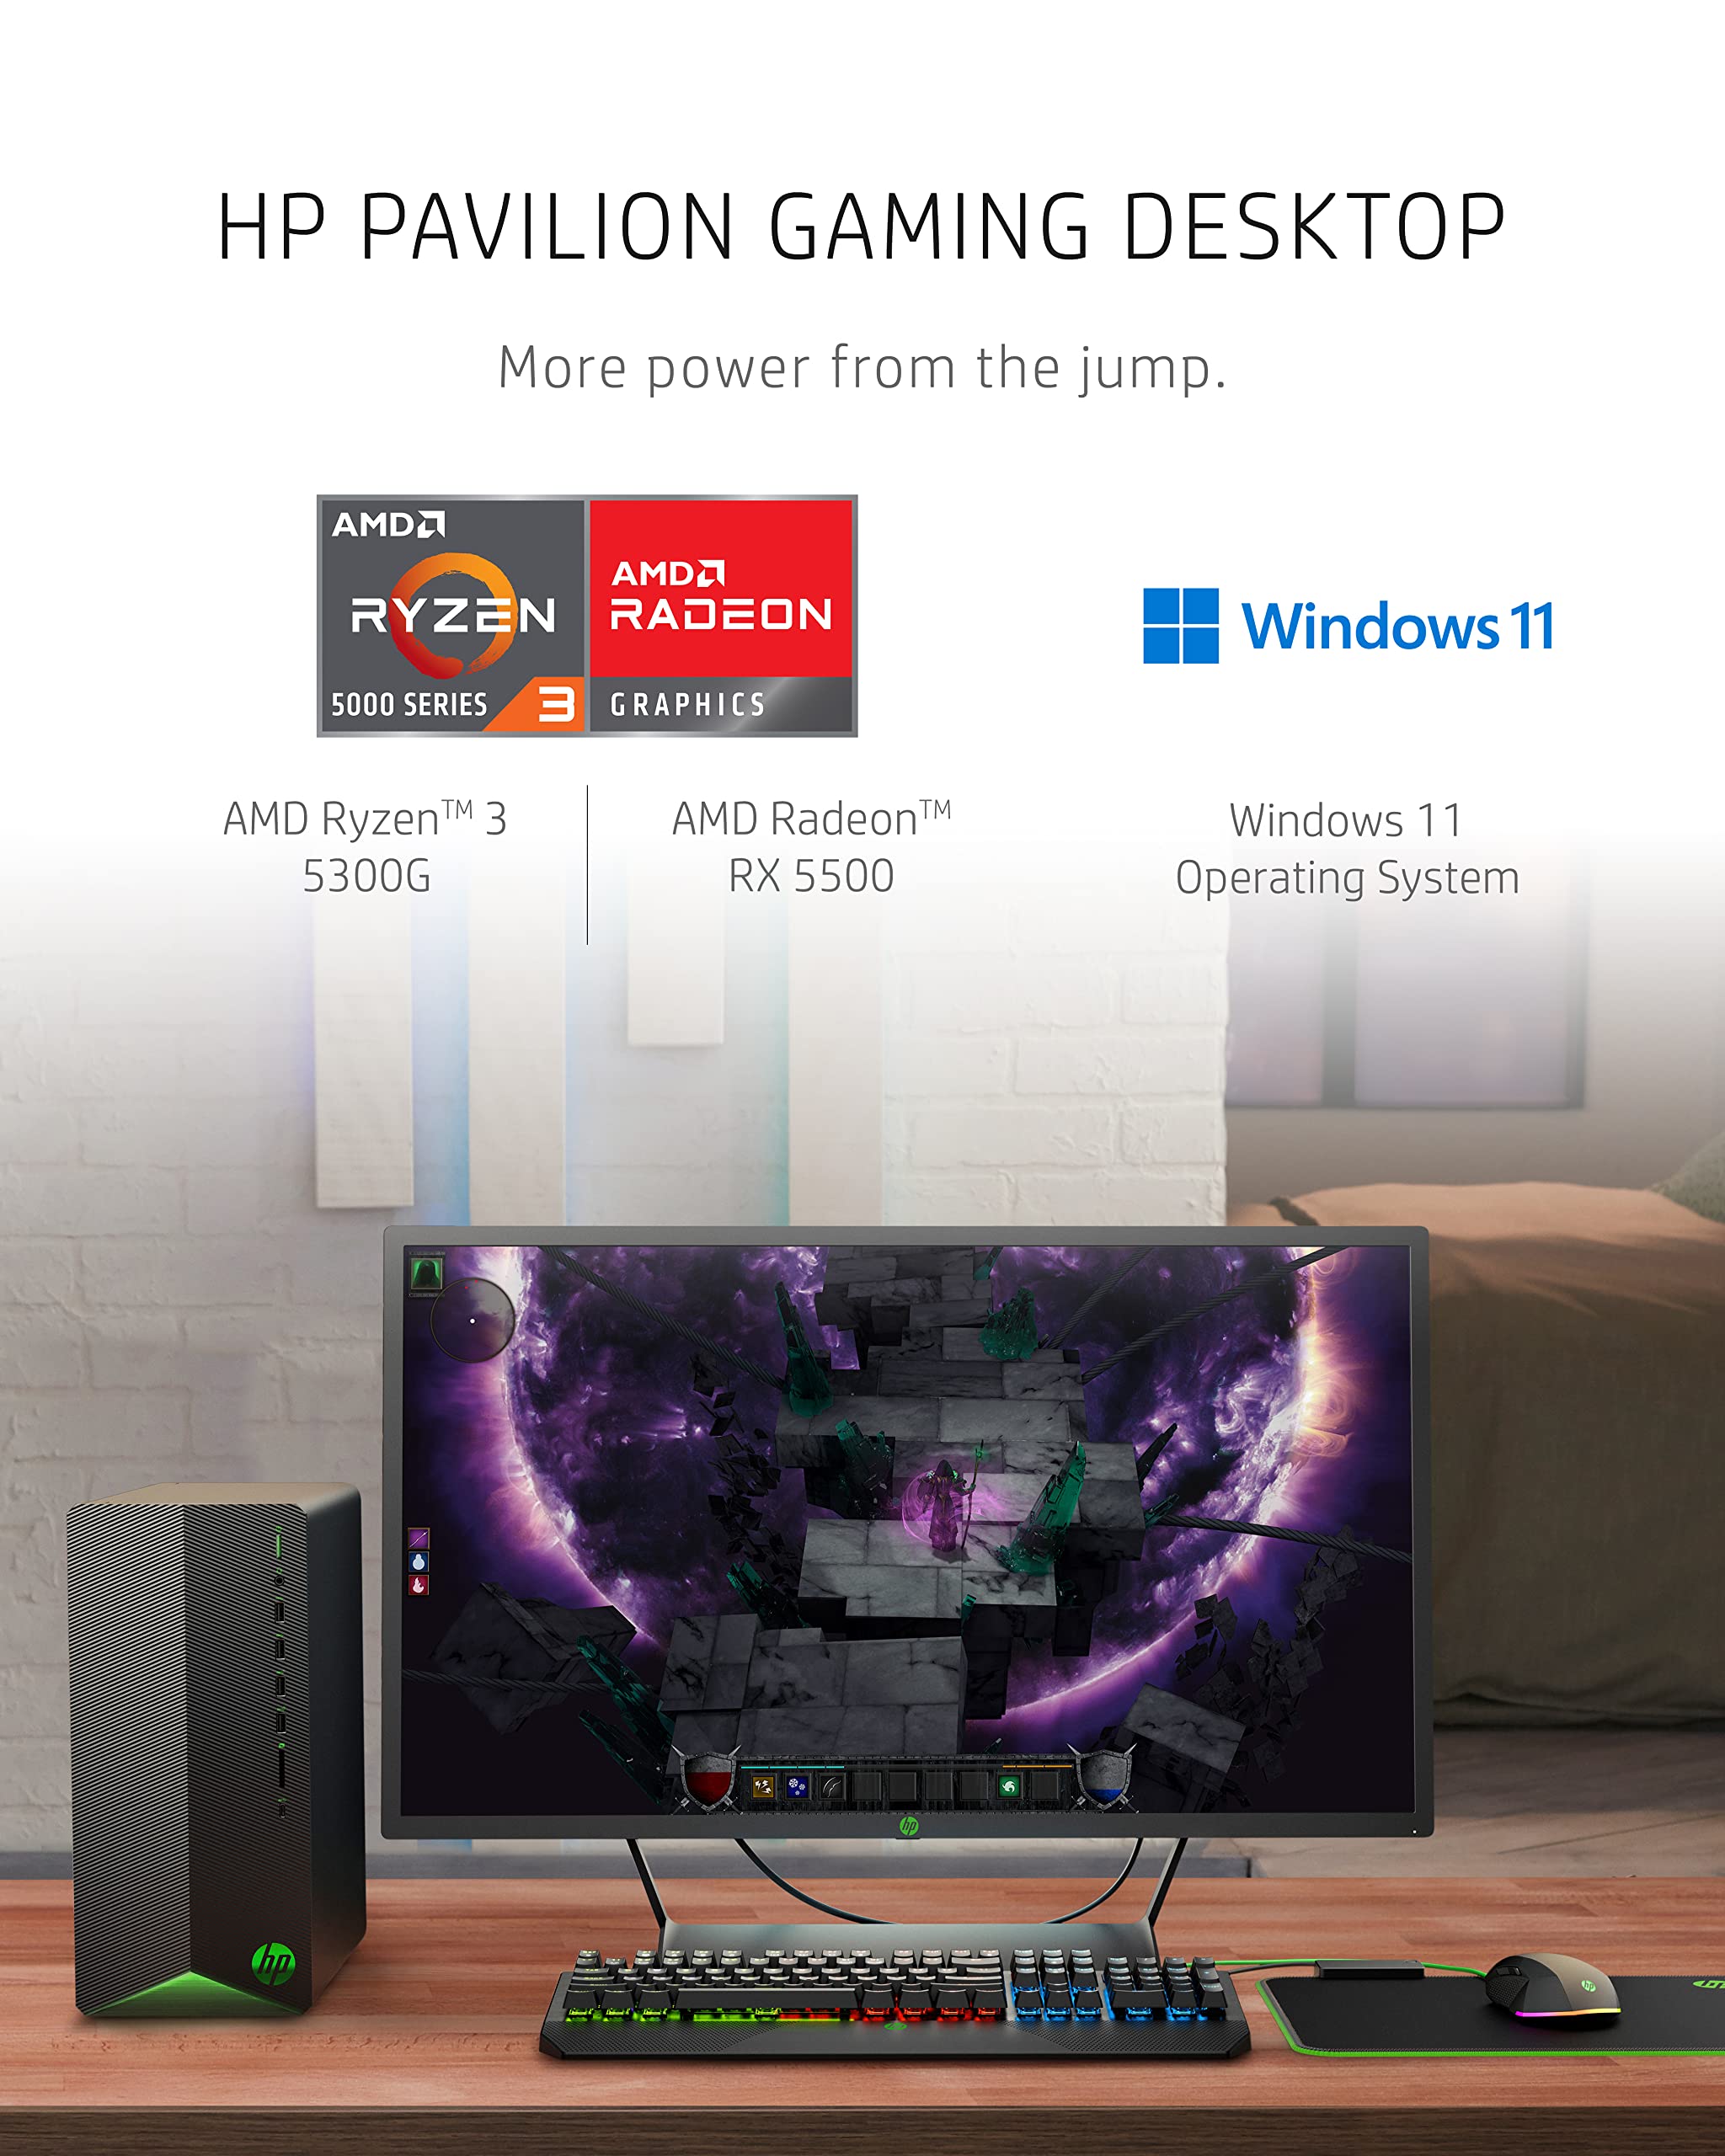 HP Pavilion Gaming Desktop, AMD Radeon RX 5500, AMD Ryzen 3 5300G Processor, 8 GB RAM, 512 GB SSD, Windows 11 Home, 9 USB Ports (TG01-2022, 2022) & Sceptre 24